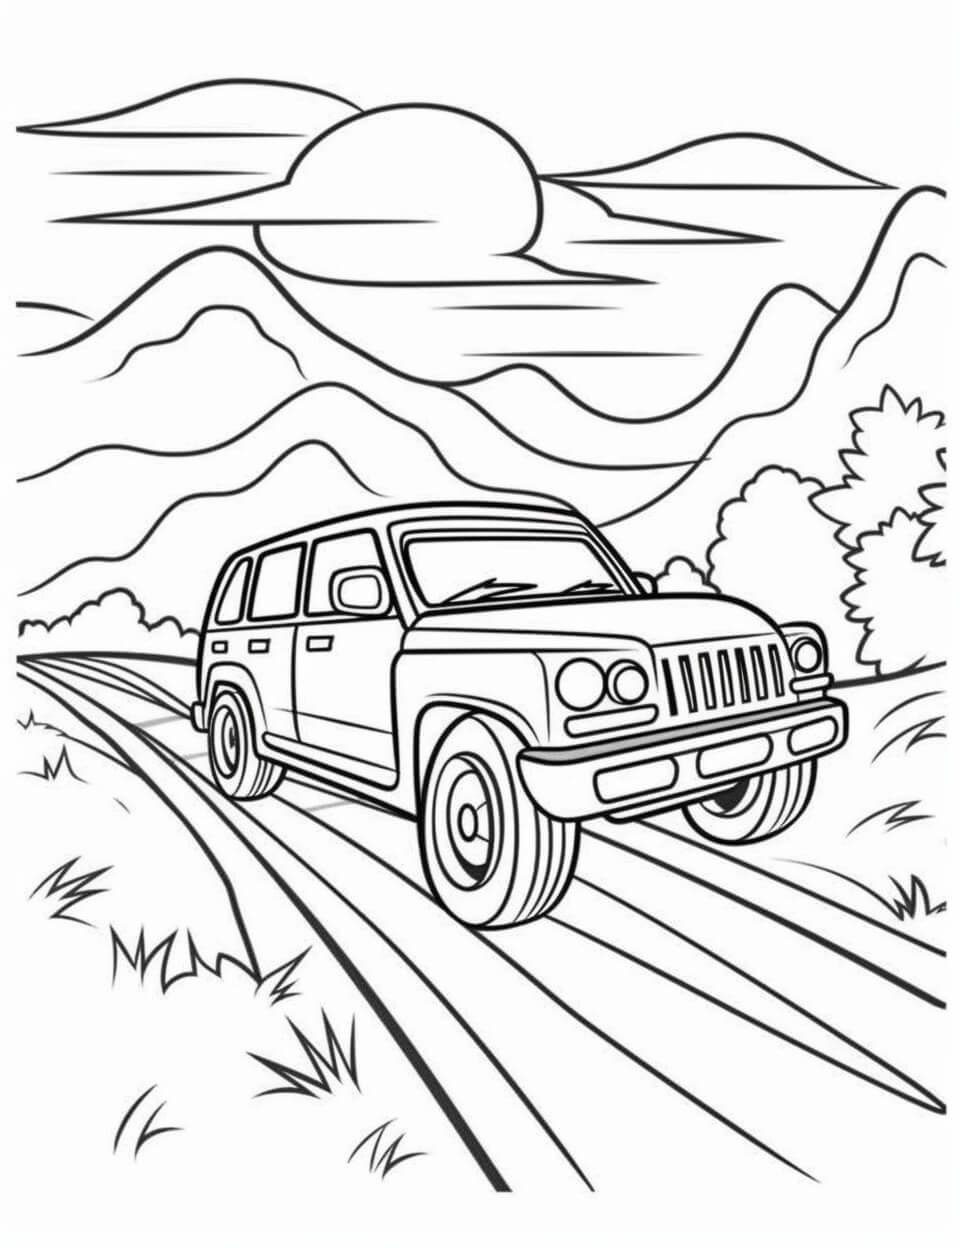 Jeep coloring sheets (free & printable)